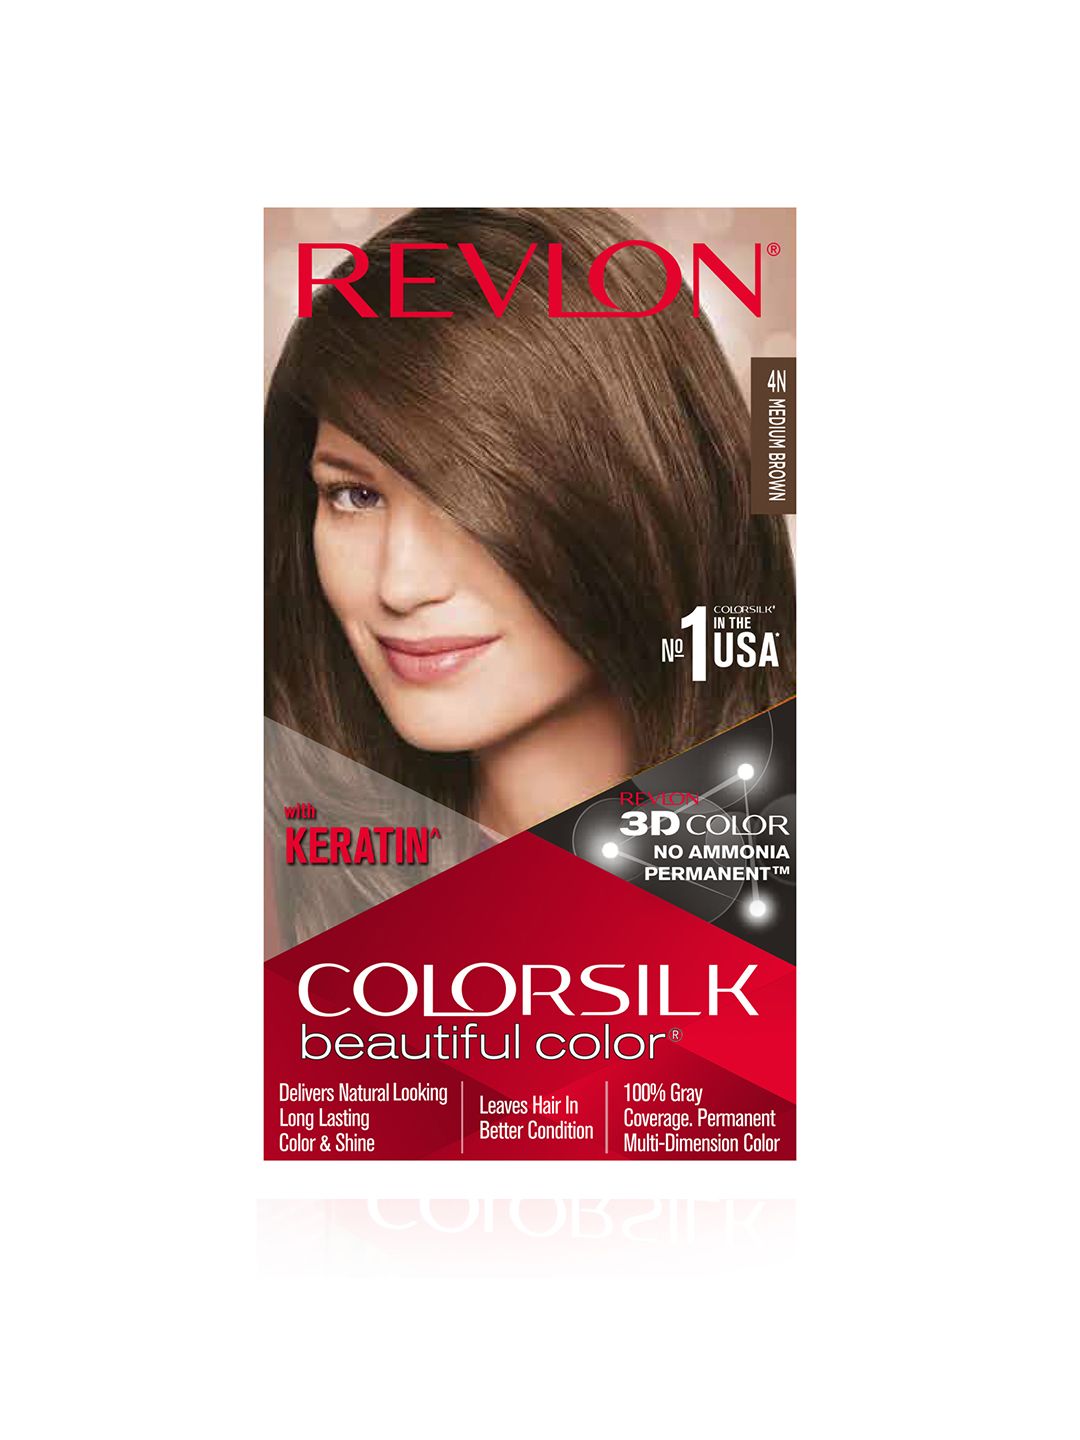 Revlon Color Silk Hair Color with Keratin - Medium Brown 4N Price in India